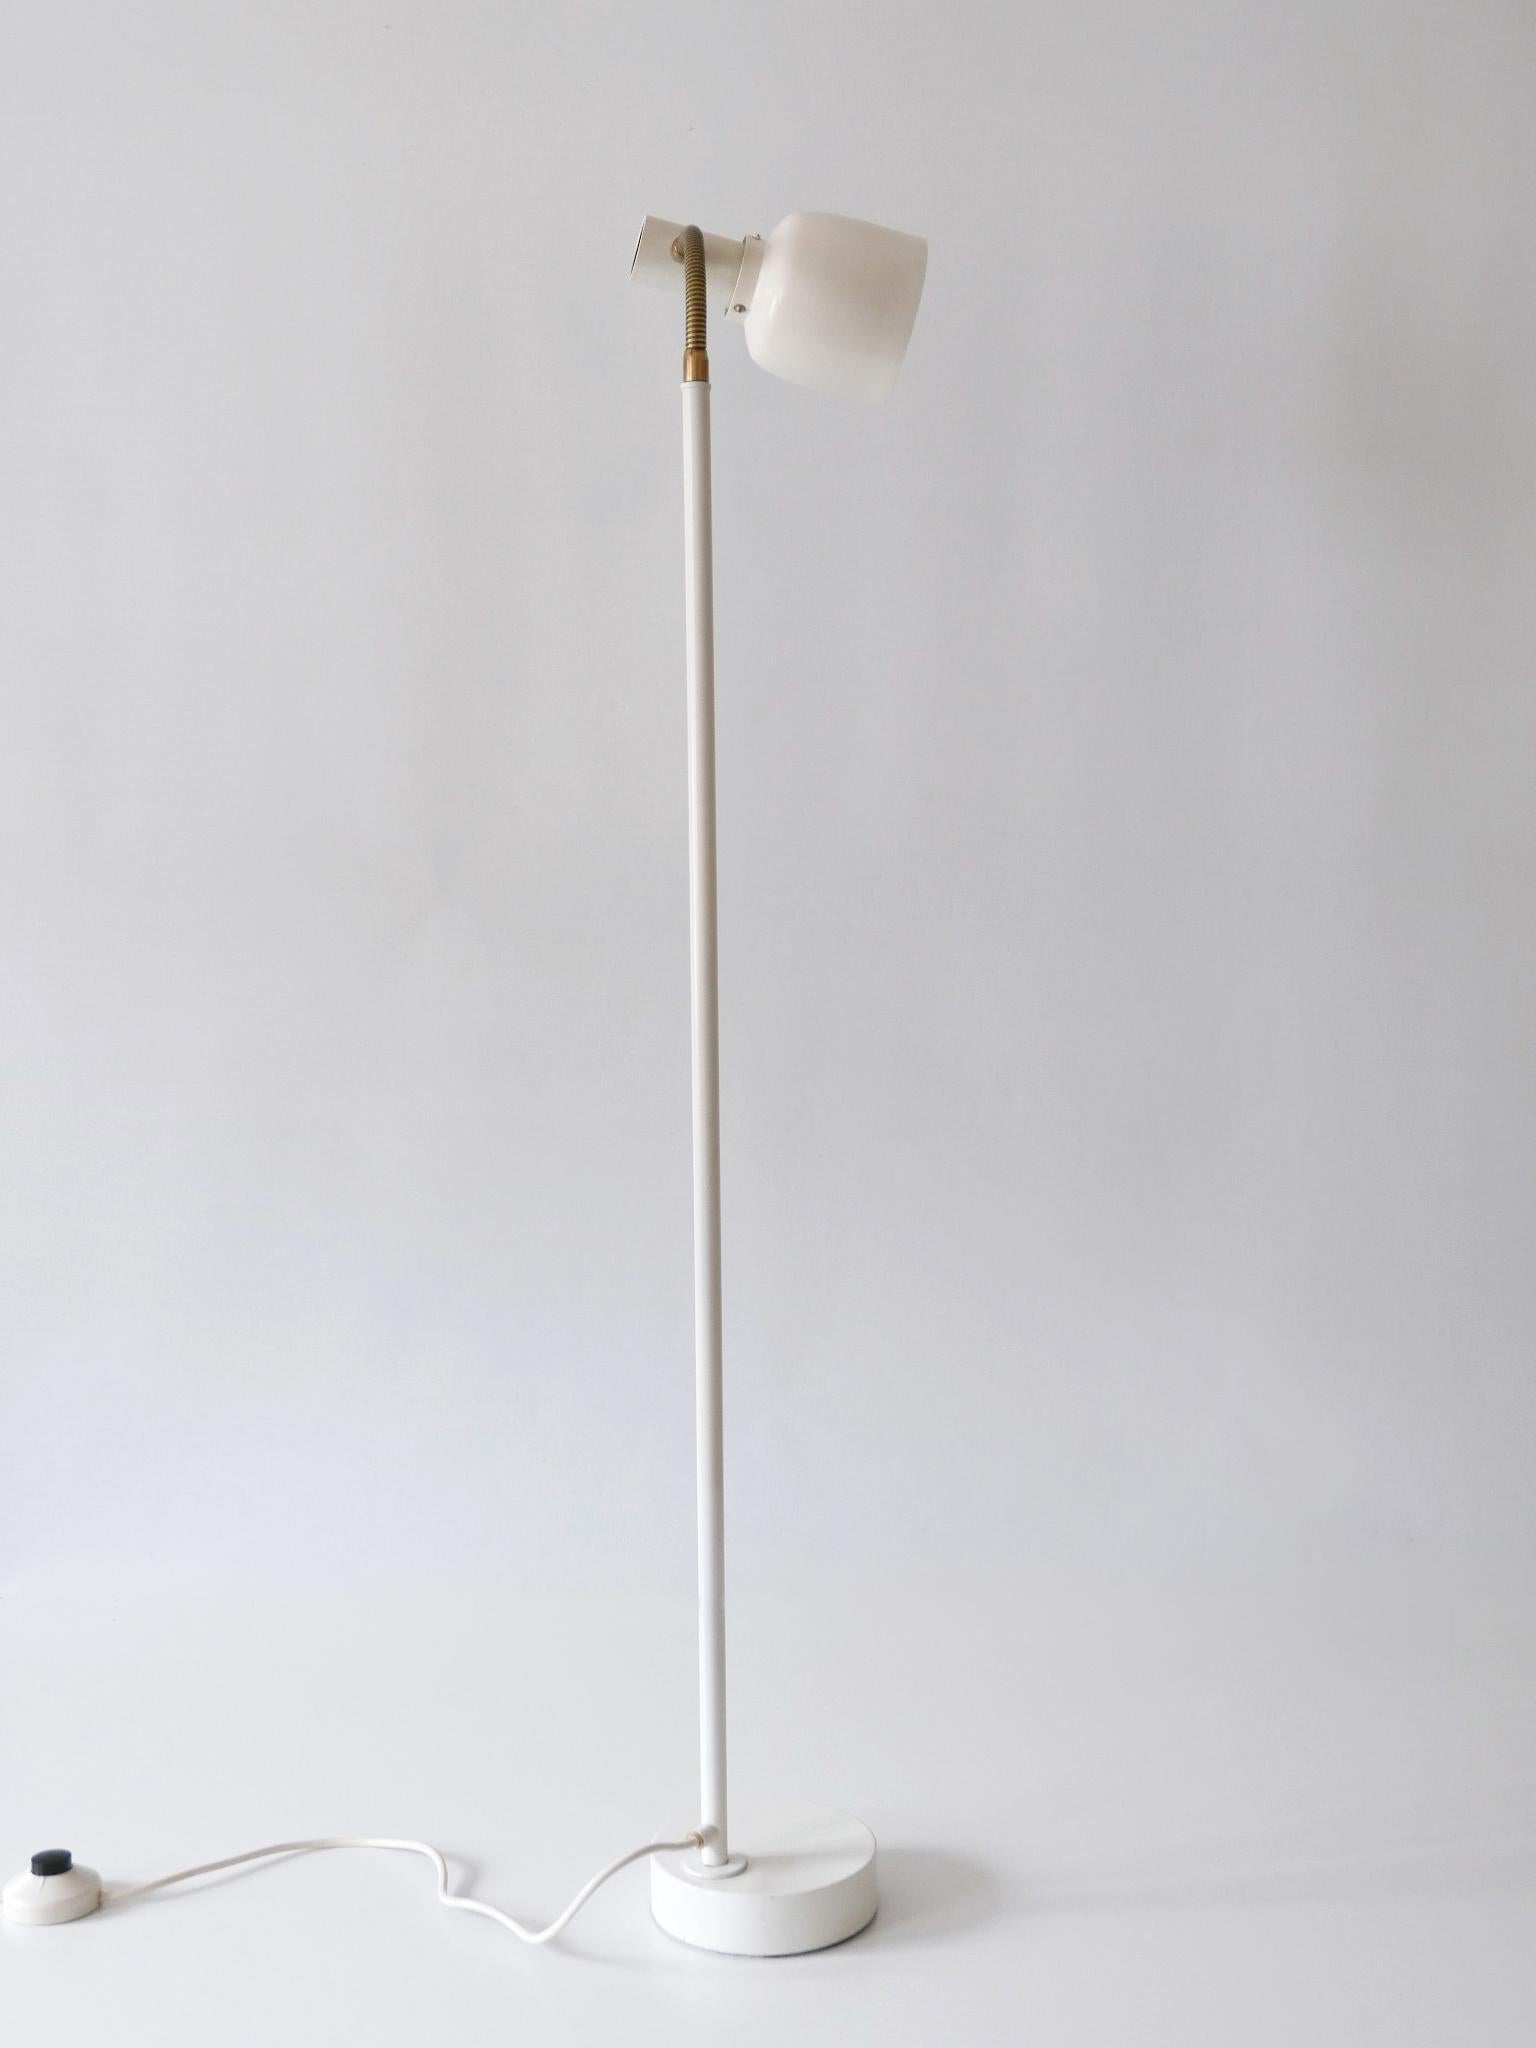 Rare Mid-Century Modern Floor Lamp or Reading Light by Hans-Agne Jakobsson 1960s For Sale 2